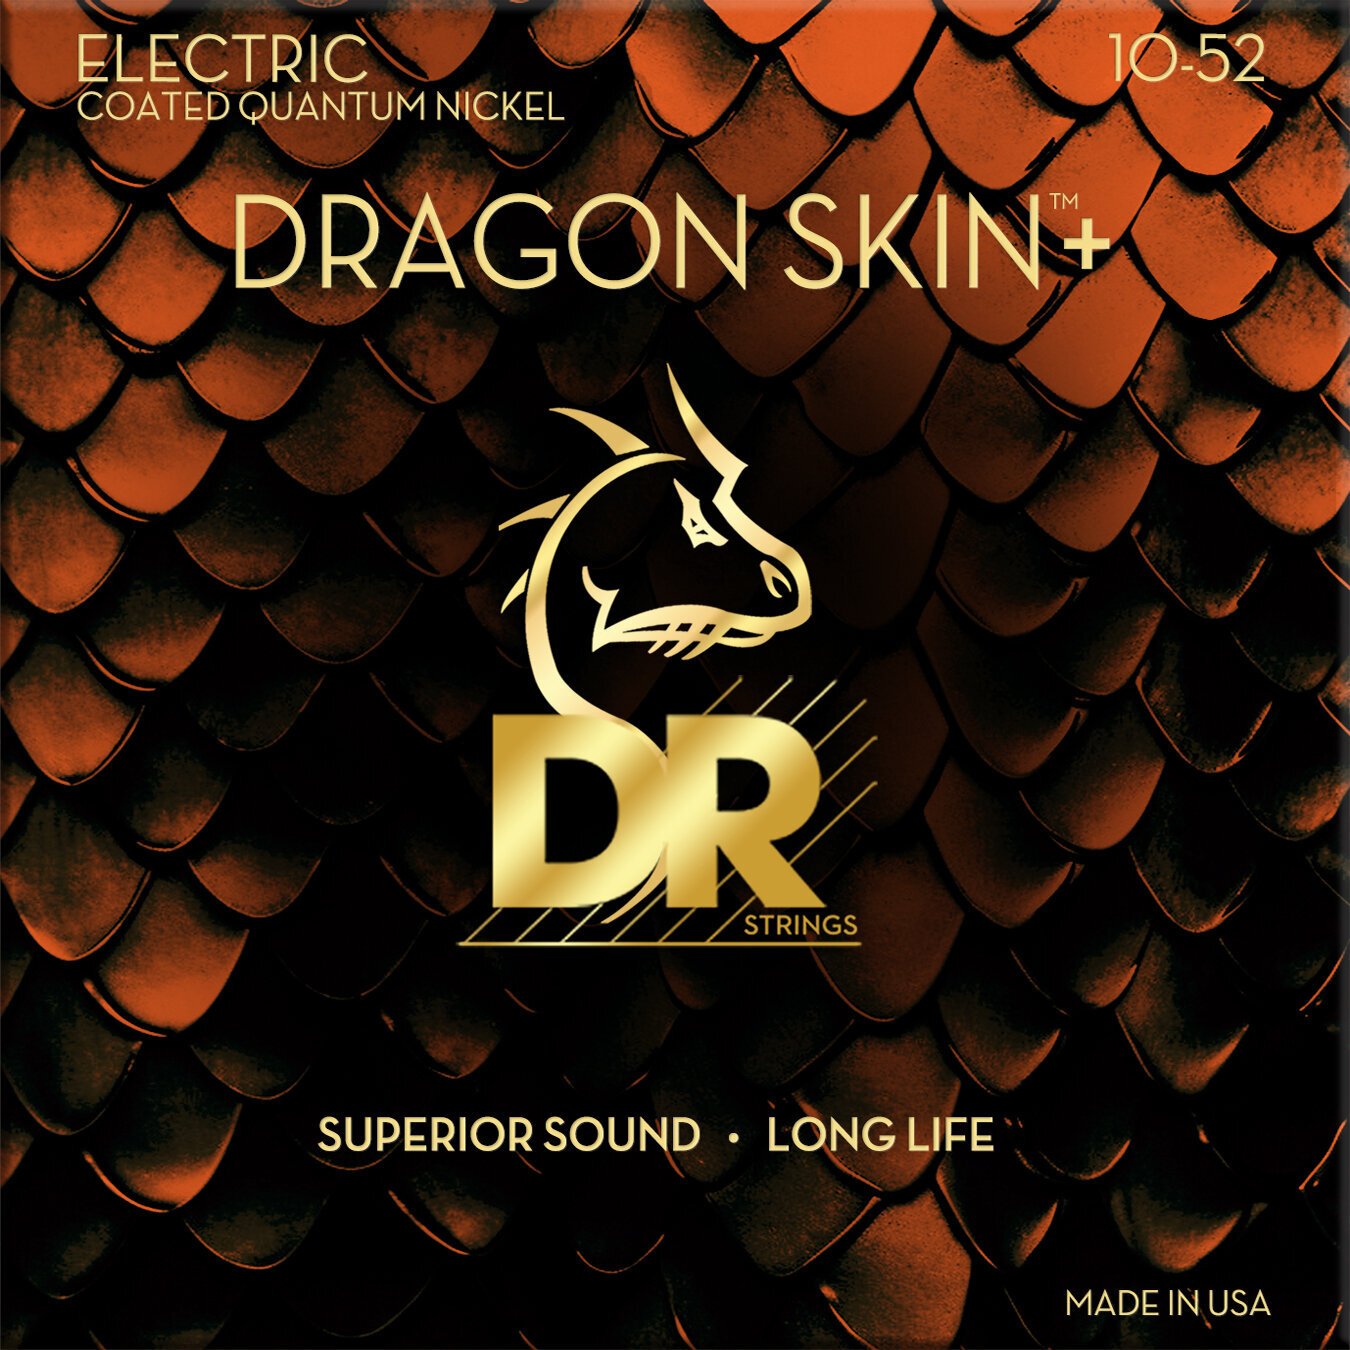 E-guitar strings DR Strings Dragon Skin+ Coated Medium to Heavy 10-52